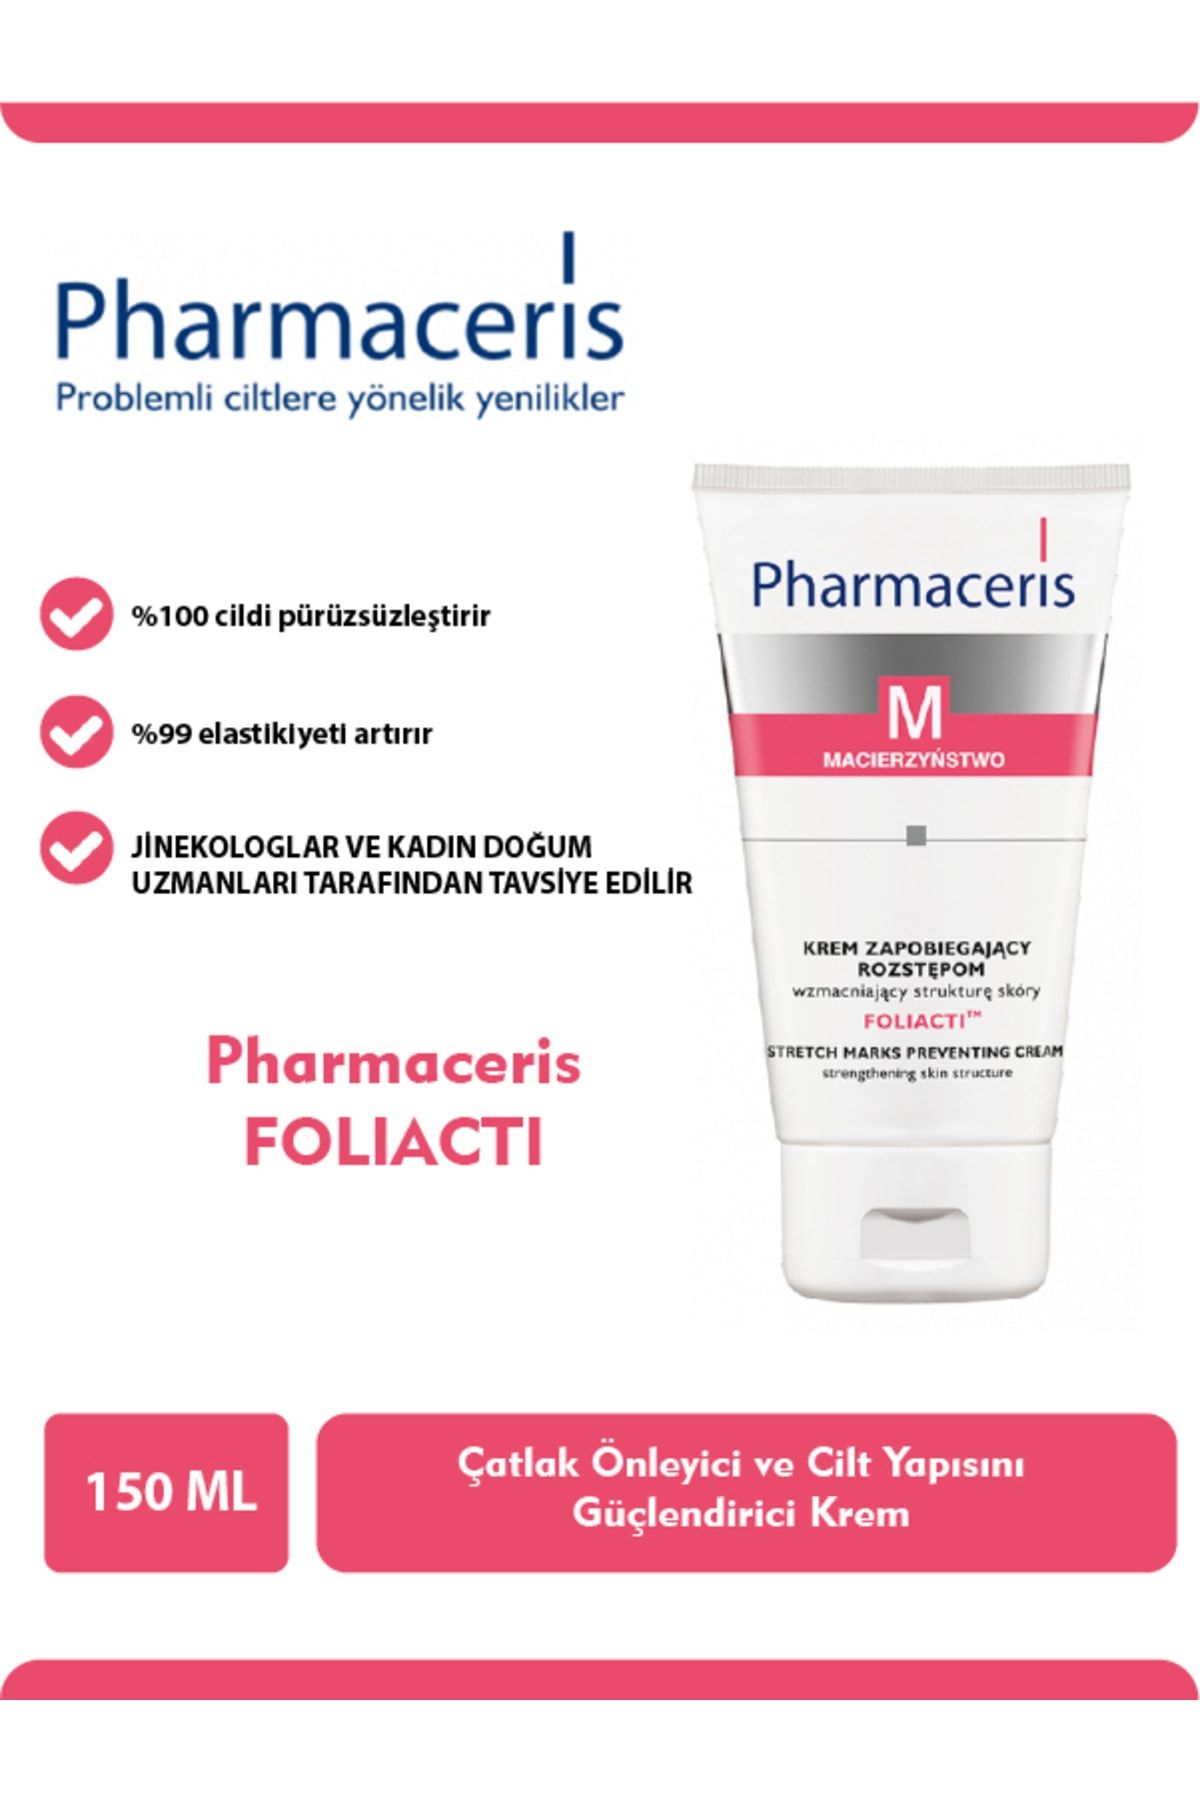 Pharmaceris Foliacti Strech Mark Preventive Cream 150 ml